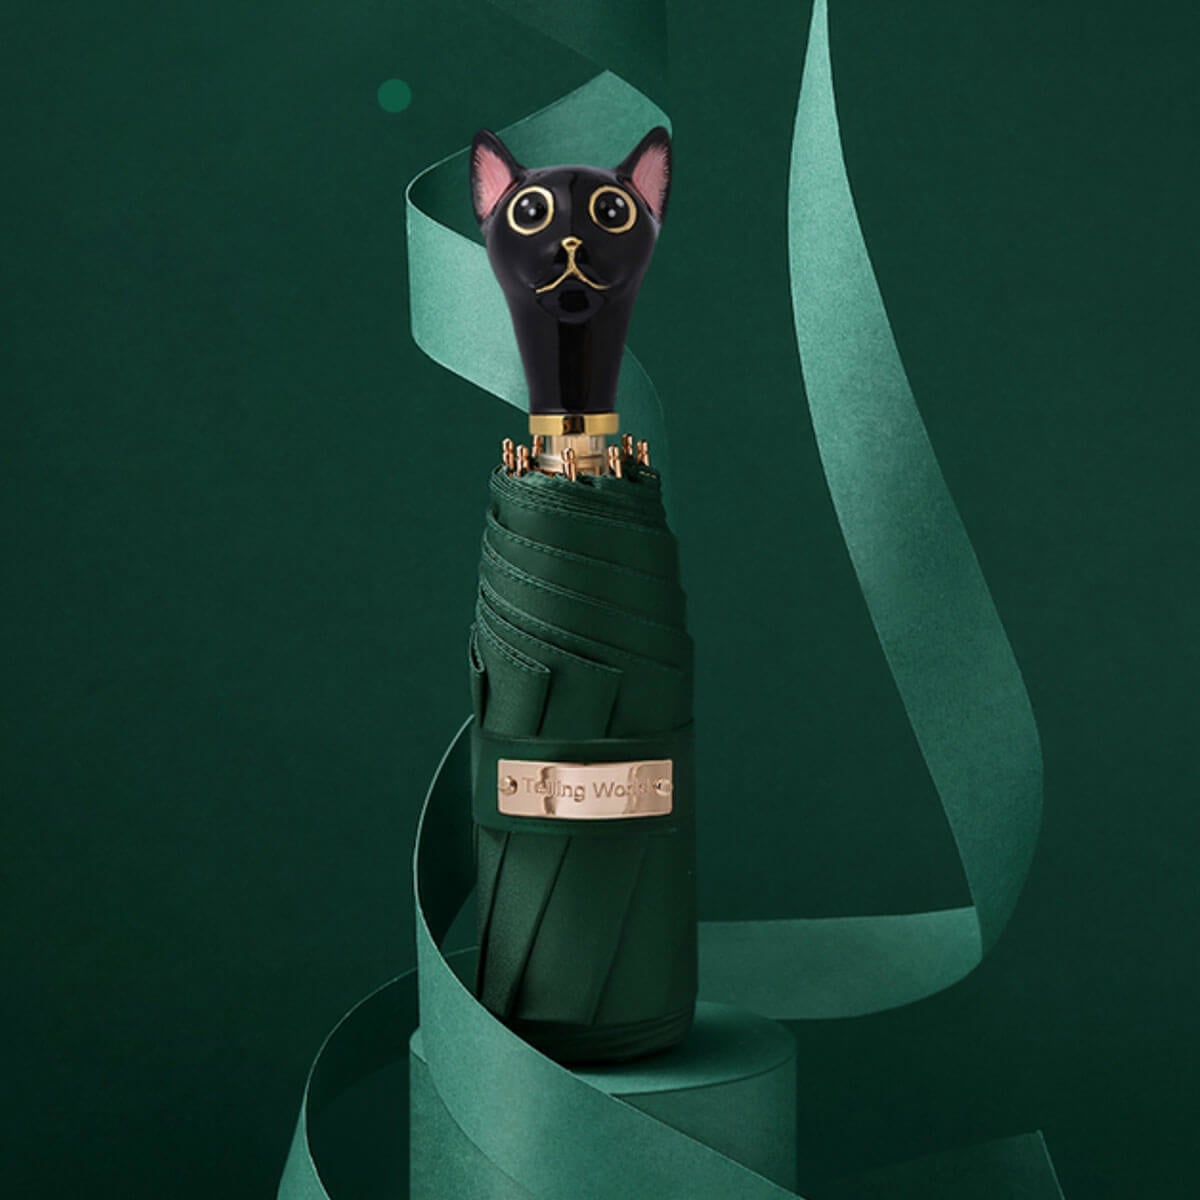 Luxury Cute Cat Folding Women’s Fashion Premium Umbrella